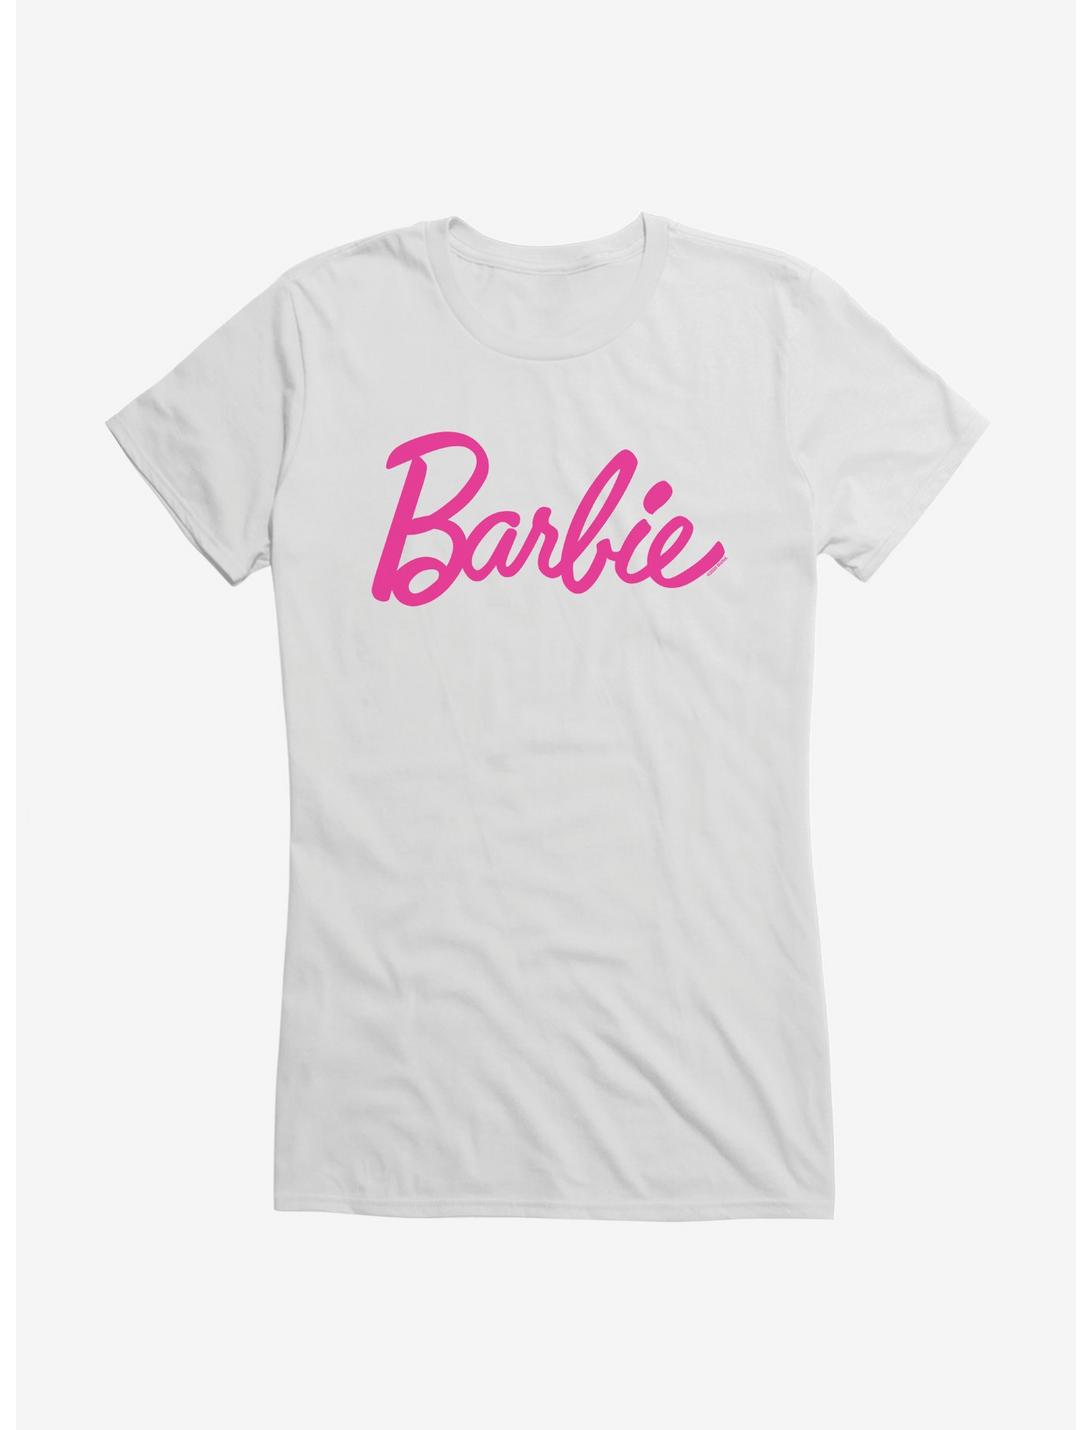 Barbie Classic Pink Script Girls T-Shirt | Hot Topic